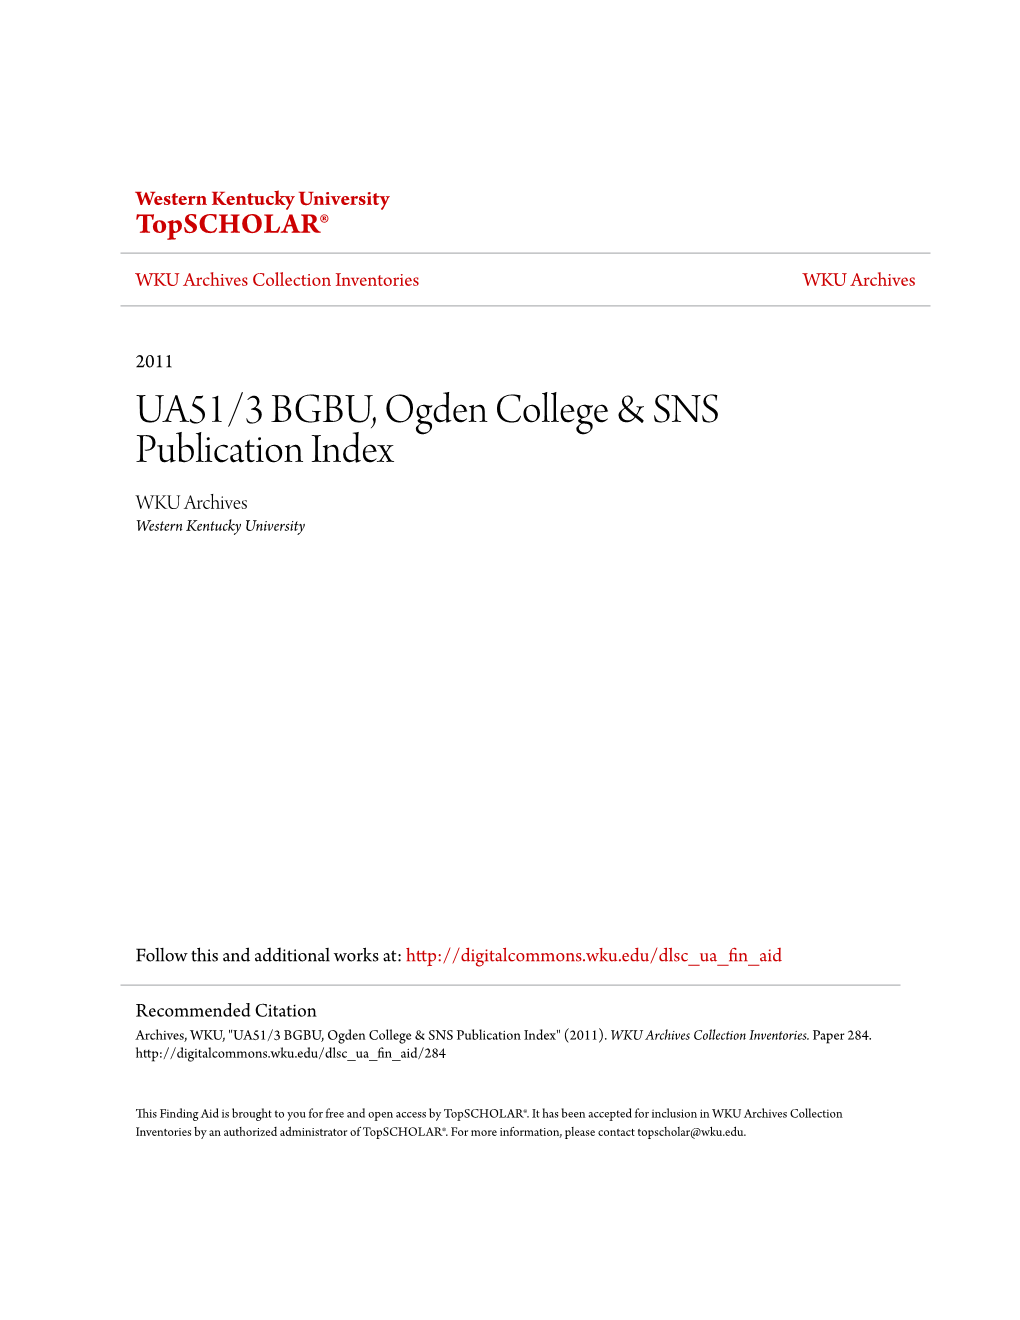 UA51/3 BGBU, Ogden College & SNS Publication Index